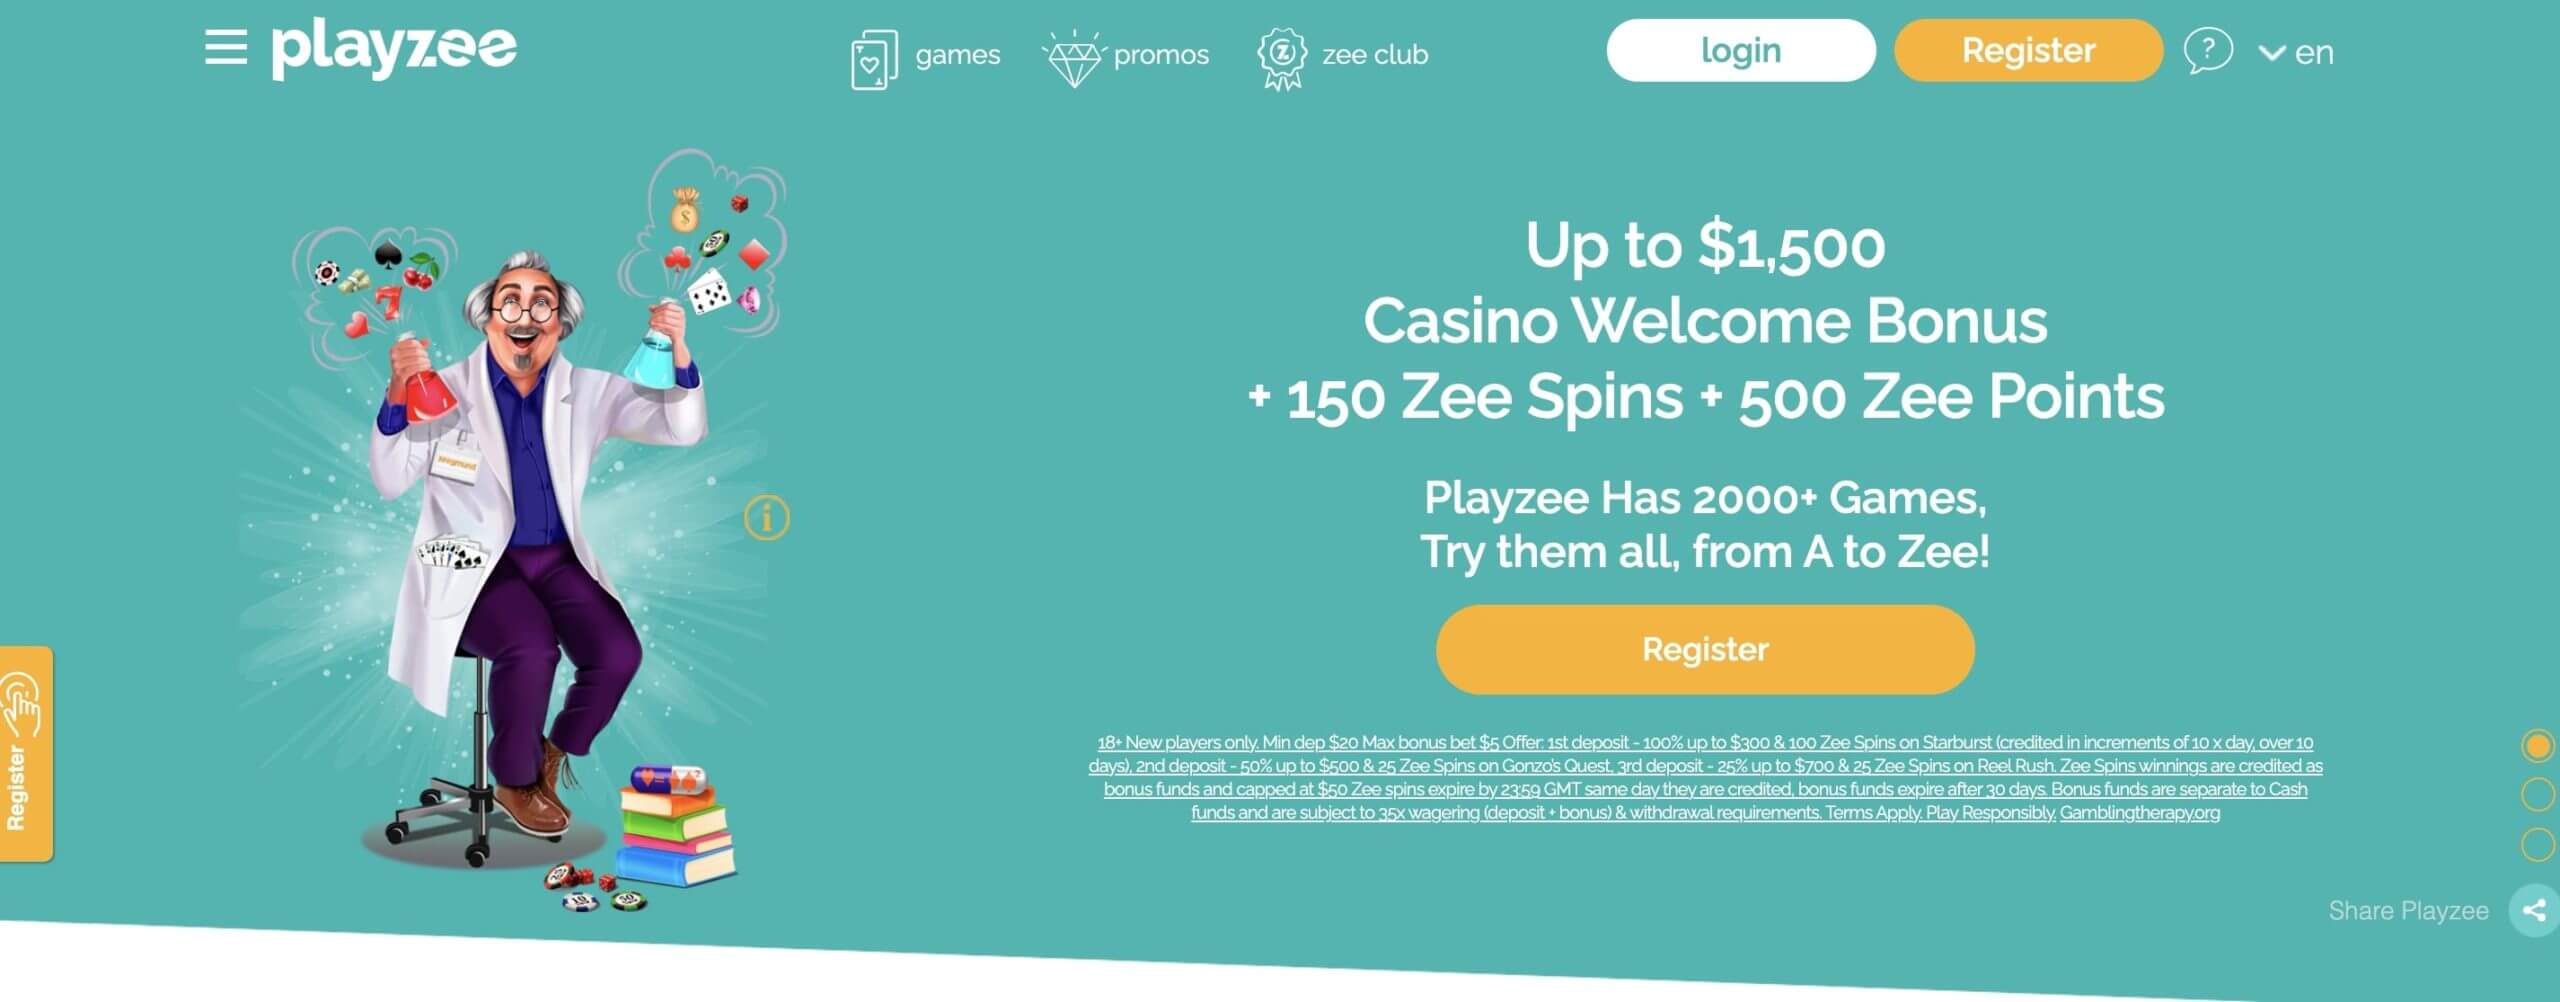 PlayZee Online Casino Review